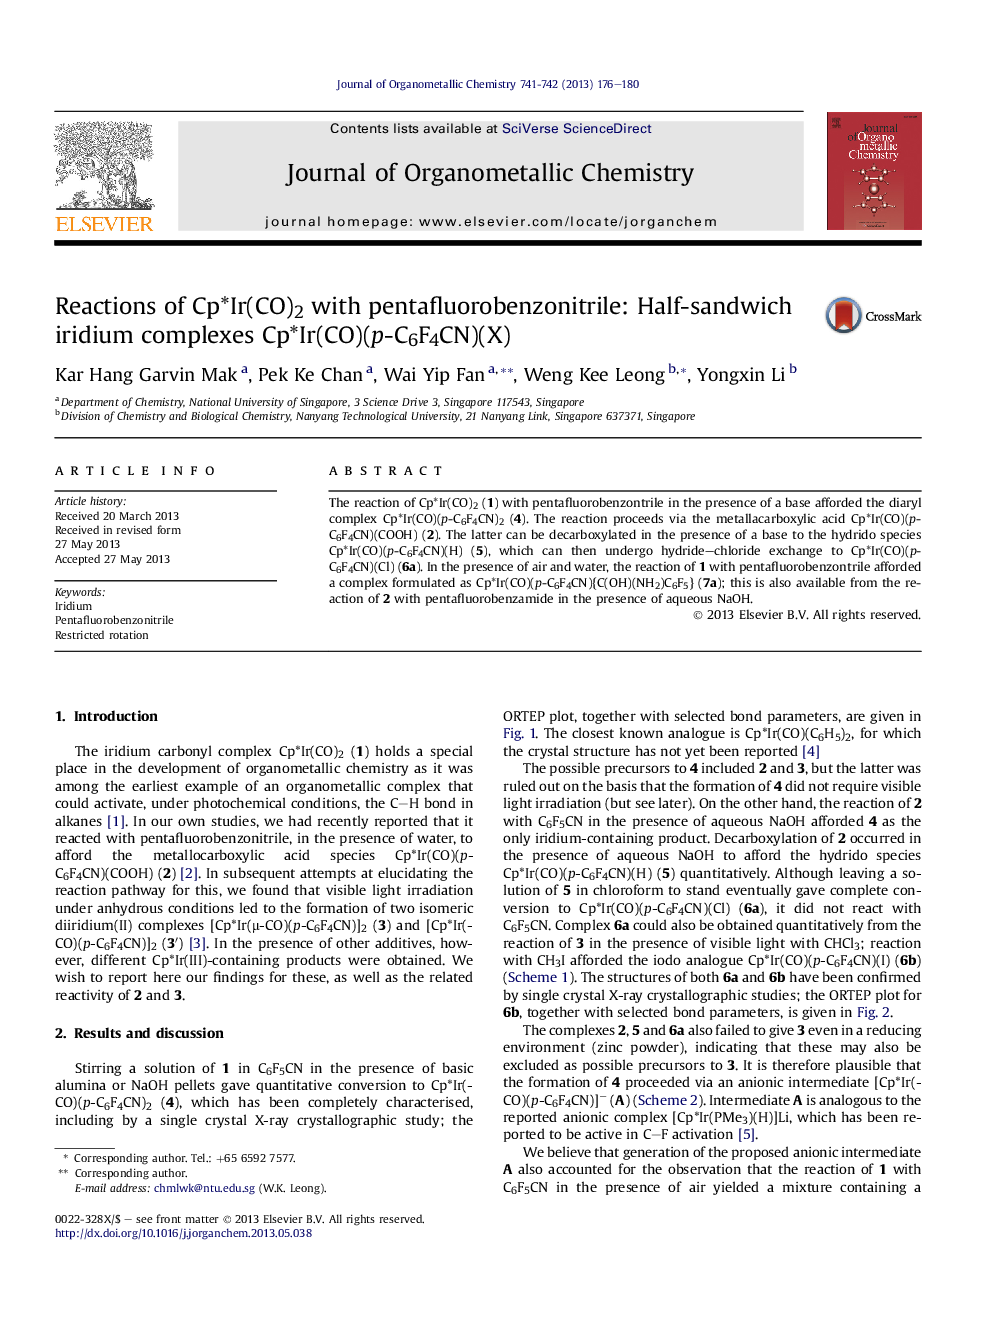 Reactions of Cp*Ir(CO)2 with pentafluorobenzonitrile: Half-sandwich iridium complexes Cp*Ir(CO)(p-C6F4CN)(X)